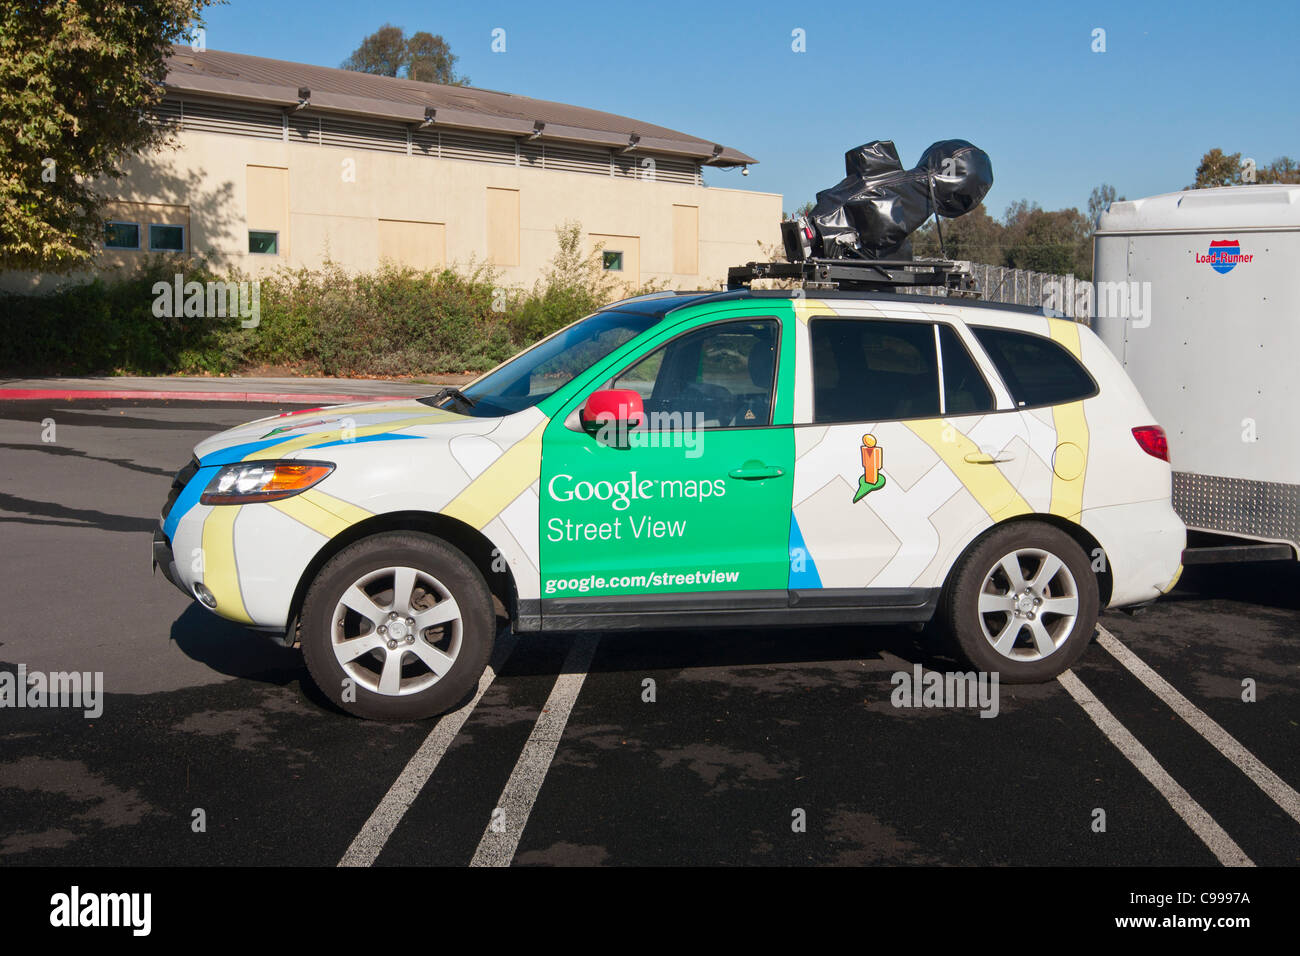 Google camera car hi-res stock photography and images - Alamy